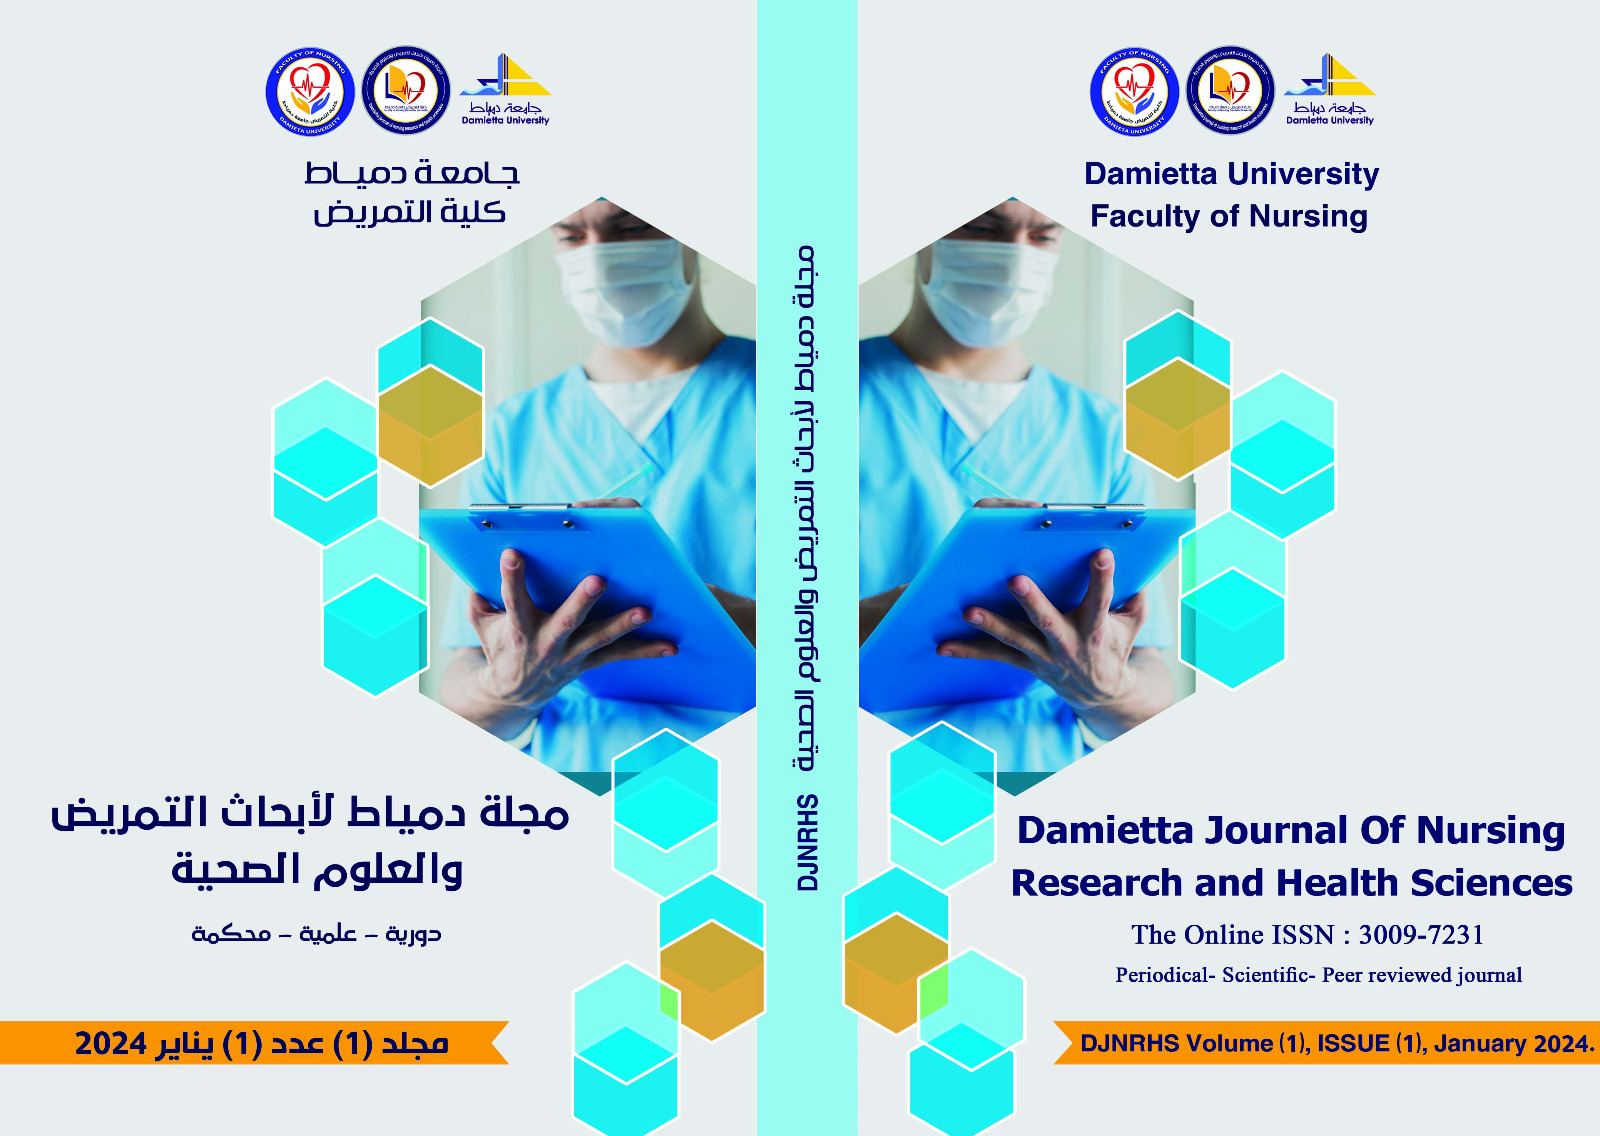 Damietta Journal of Nursing Research and Health Sciences